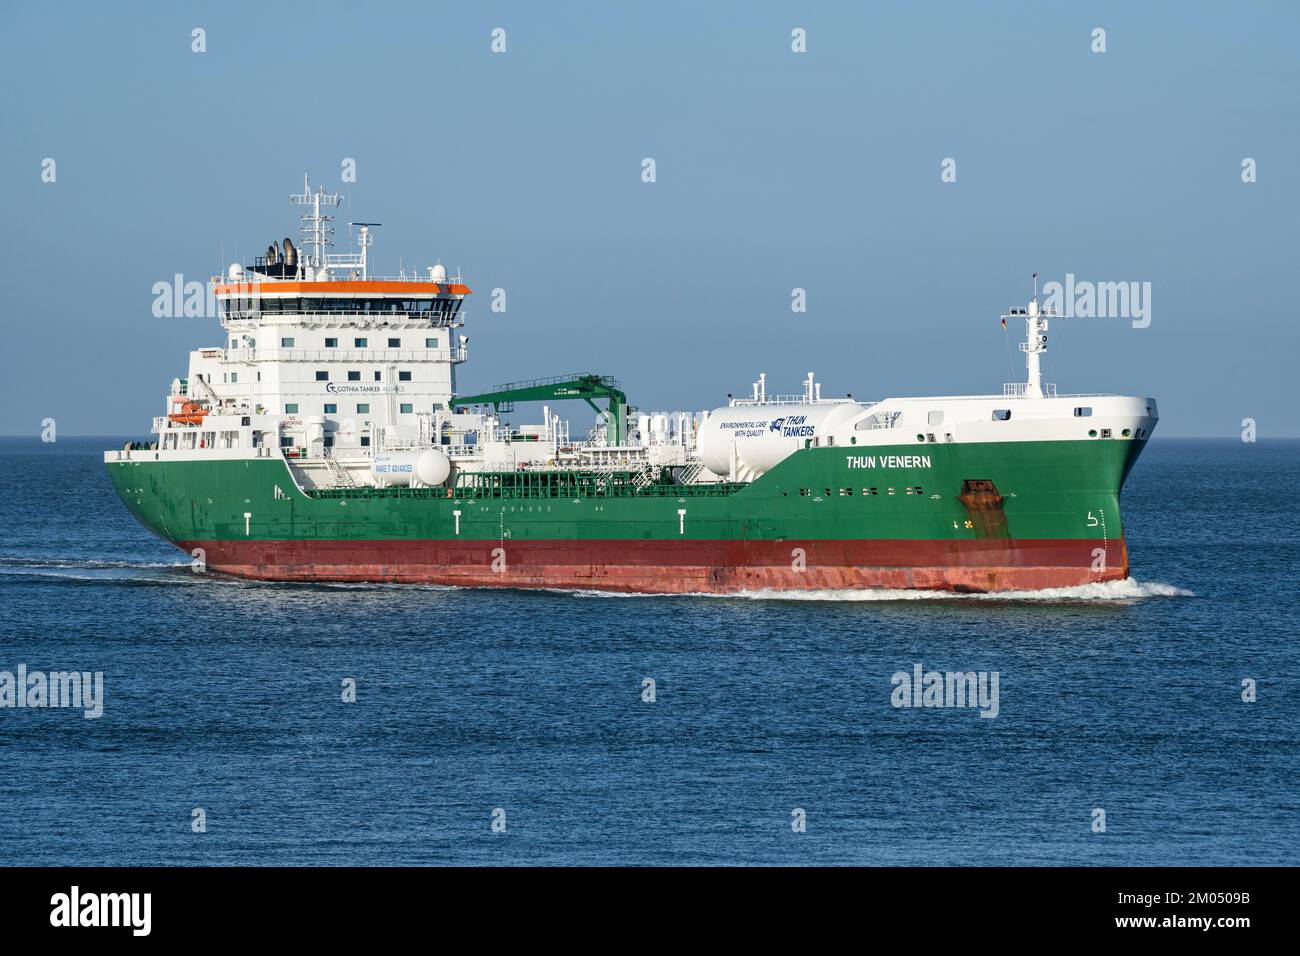 product/ chemical tanker THUN VENERN on the river Elbe Stock Photo